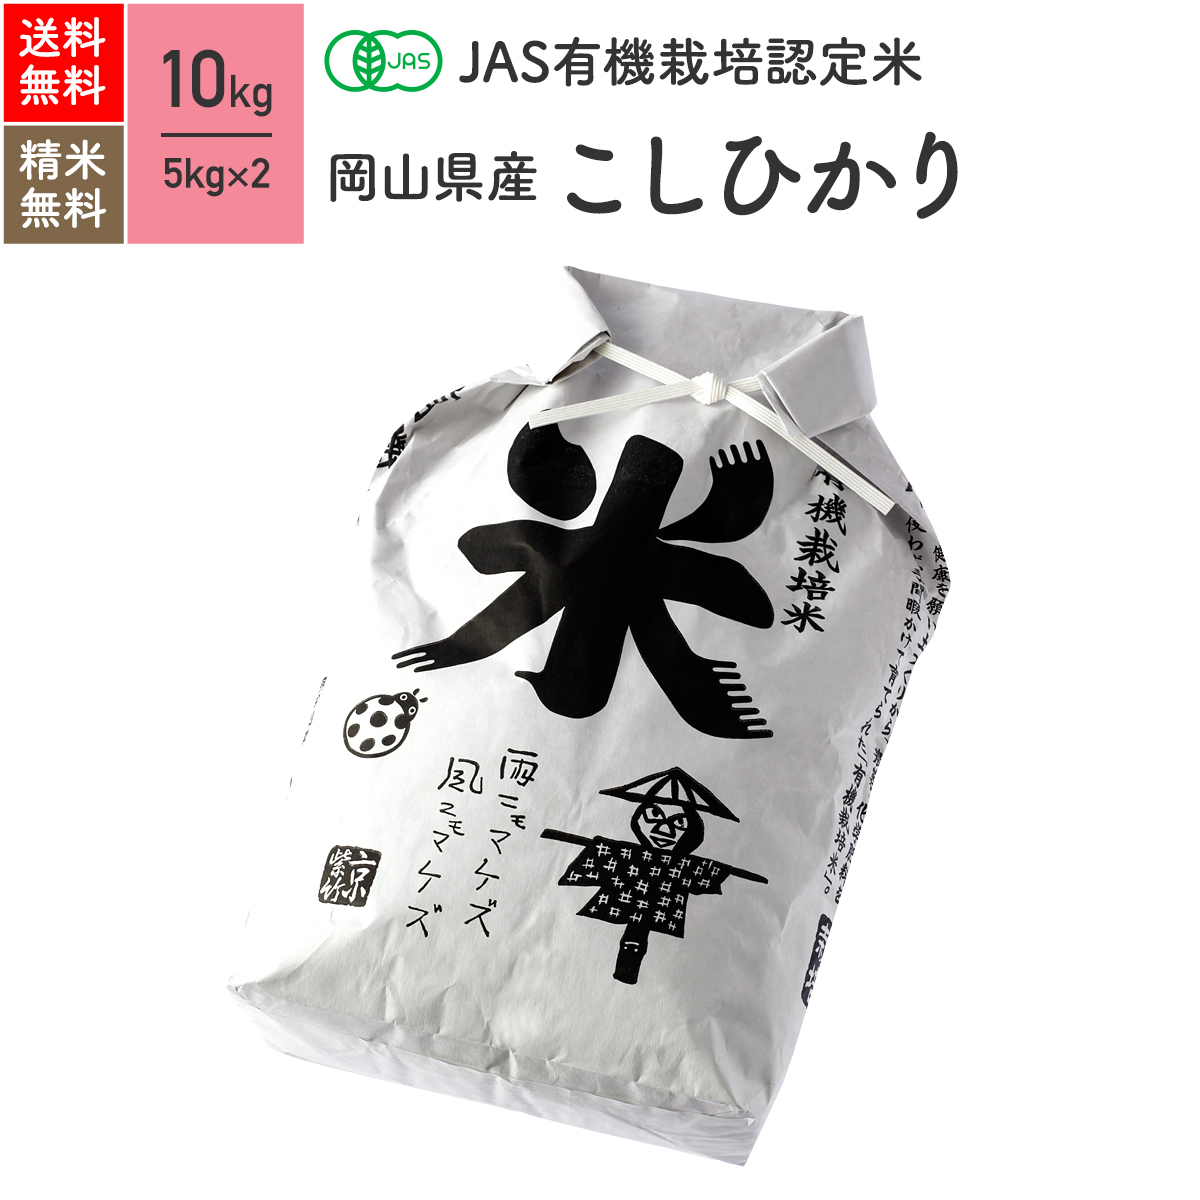 無農薬 玄米 米 10kgコシヒカリ 岡山県産 JAS有機米 令和元年産 送料無料